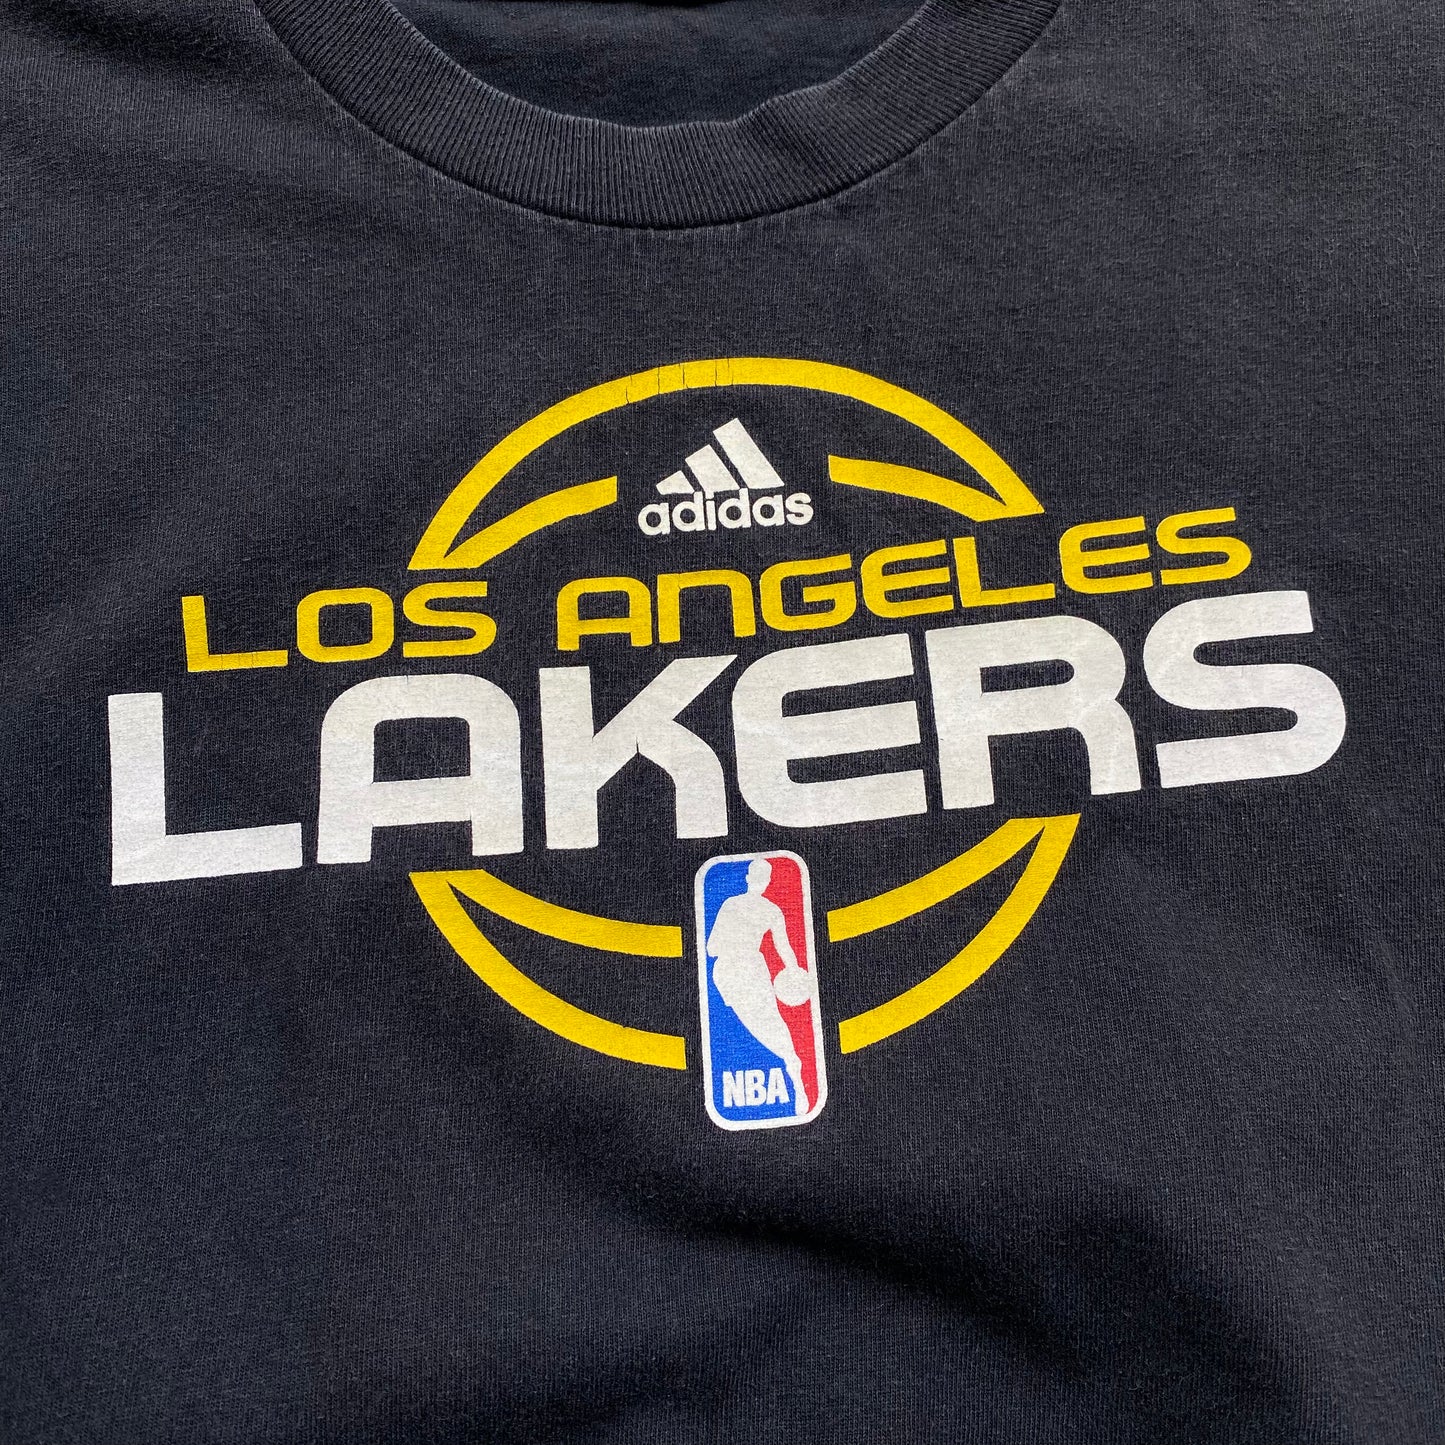 00’s adidas "LOS ANGELES LAKERS" T-SHIRT